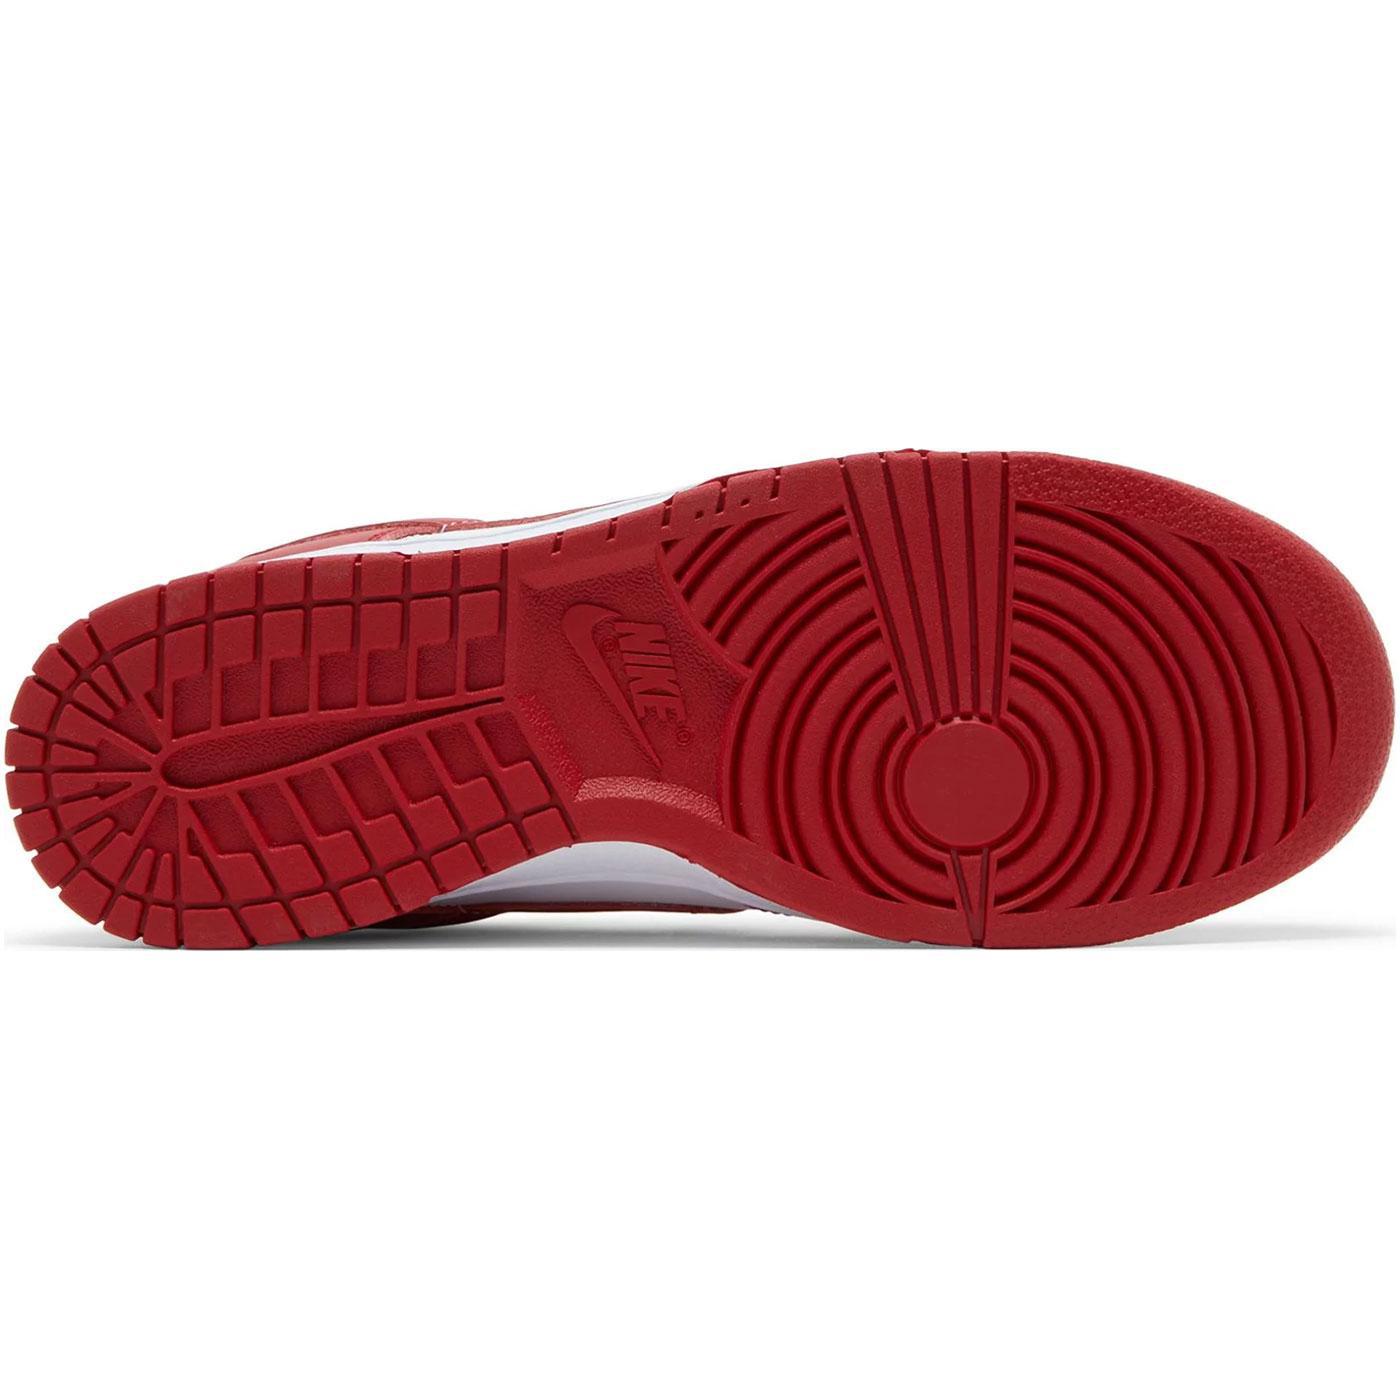 Dunk Low 'Gym Red' DD1391 602 Sole | Nike